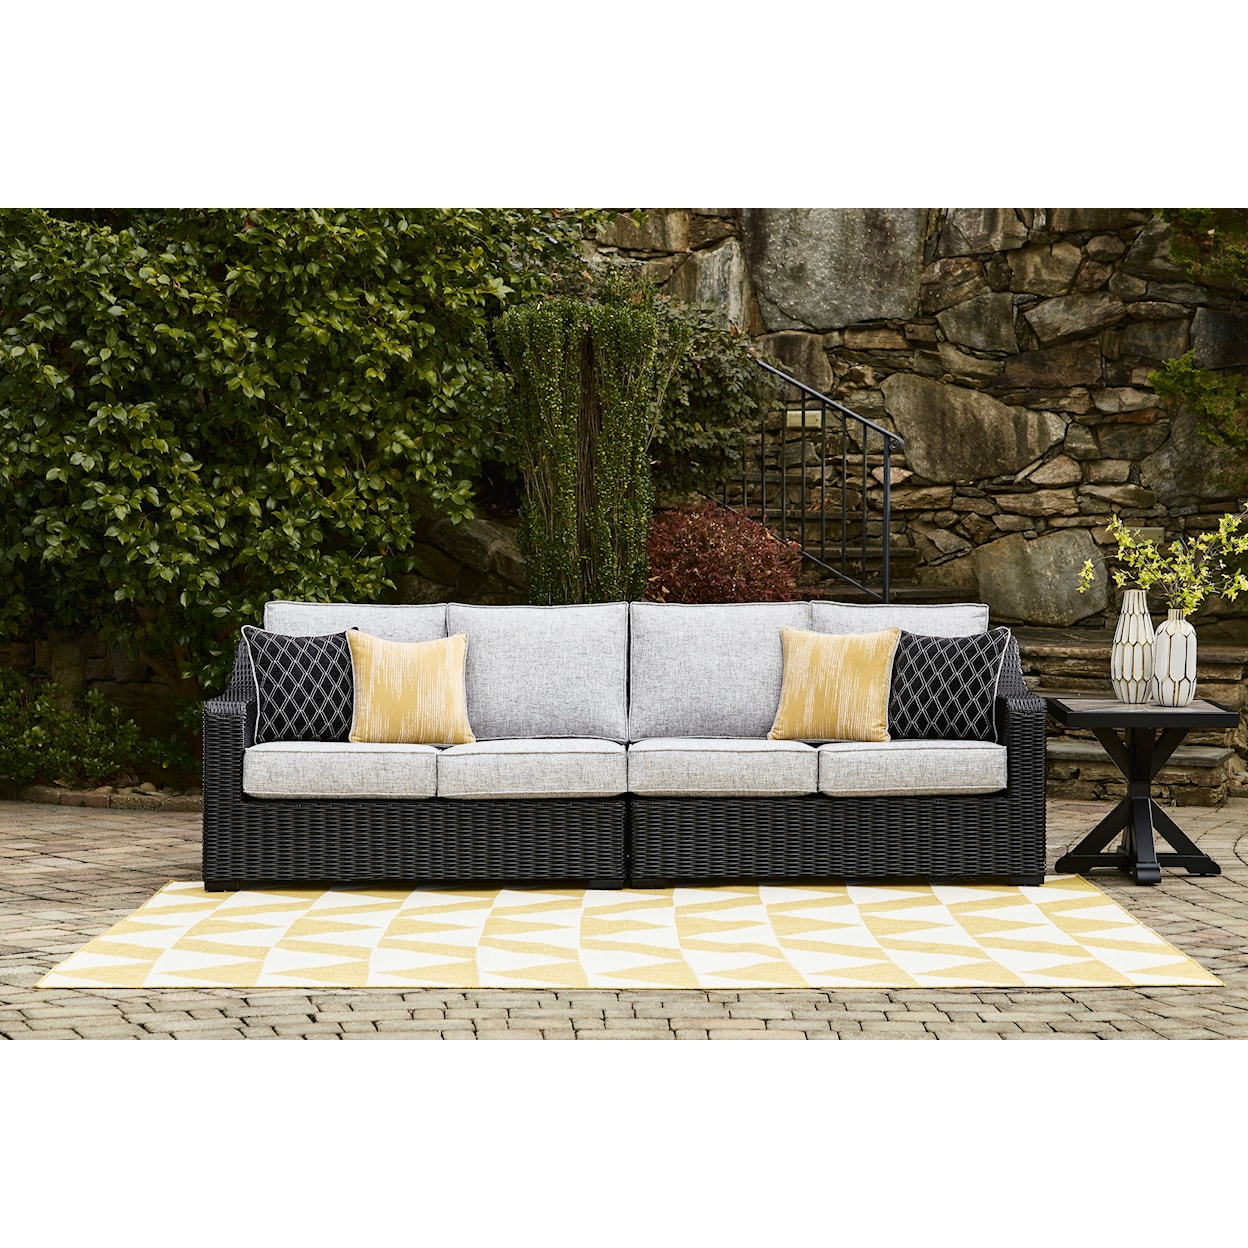 Ashley Furniture Signature Design Beachcroft 2-Piece Outdoor Loveseat With Cushion